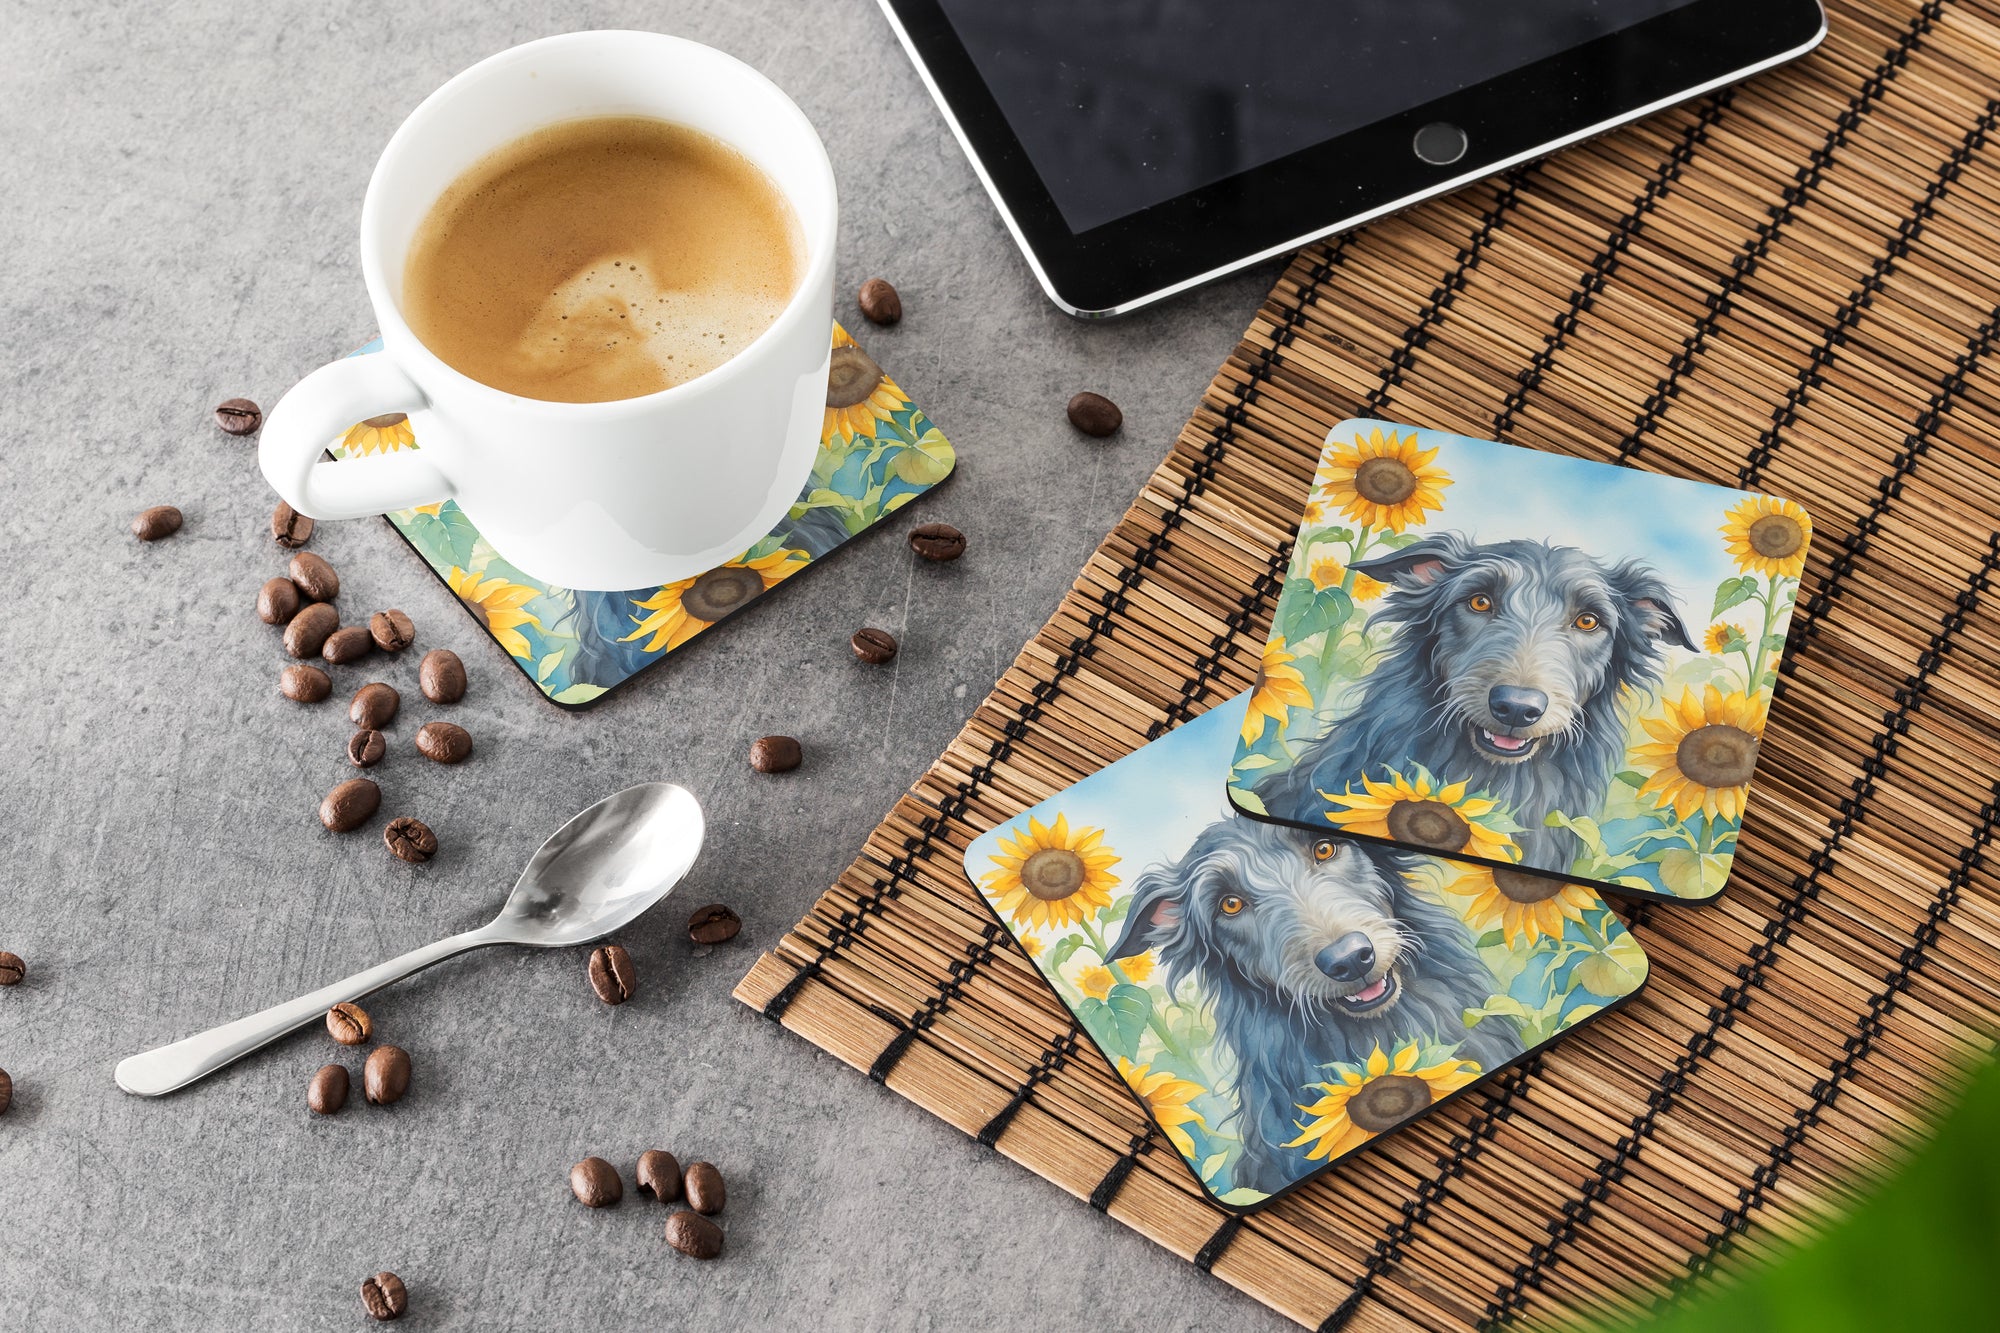 Scottish Deerhound in Sunflowers Foam Coasters